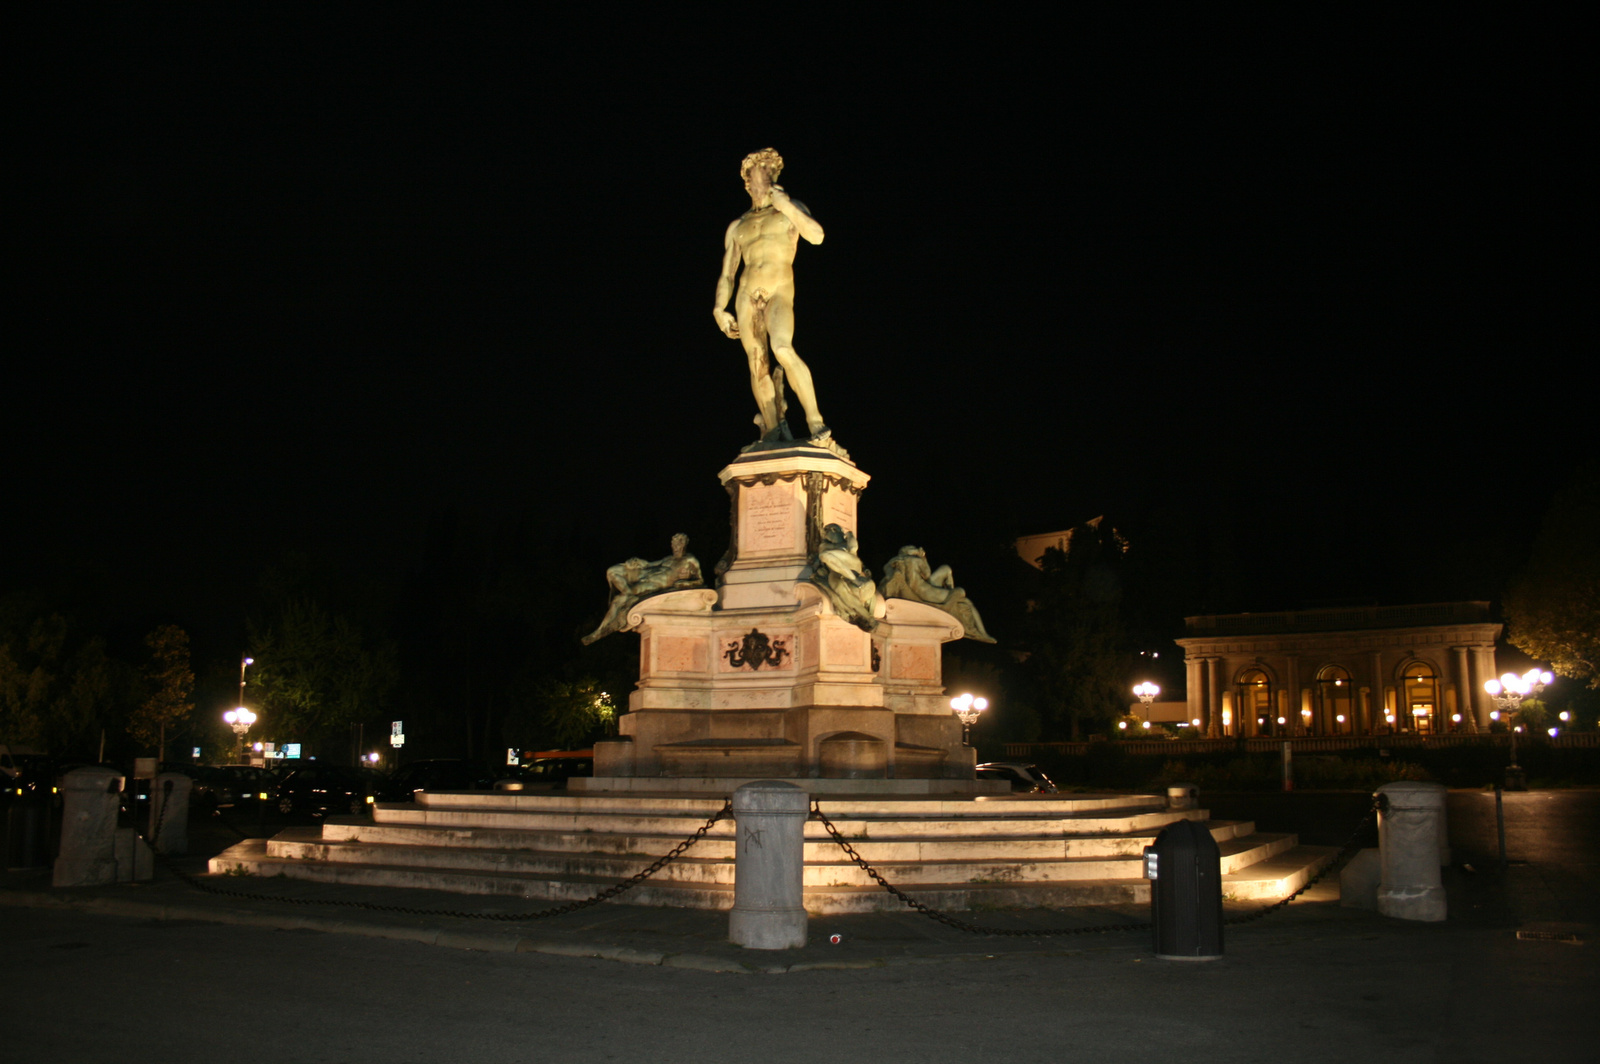 Piazzale Michelangelo, Firenze